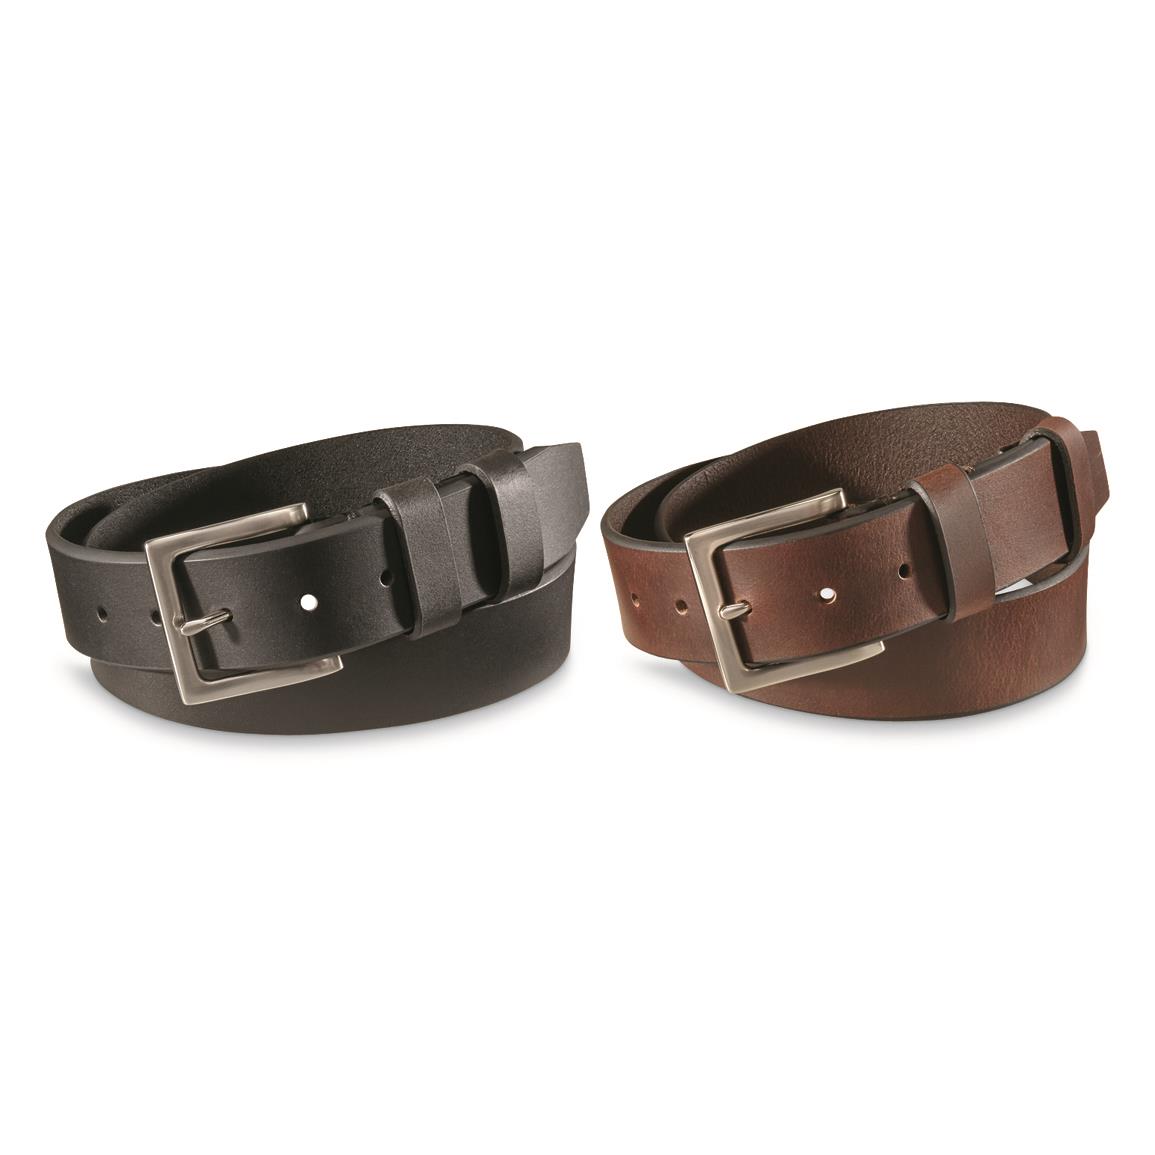 Guide Gear Men's Leather Belts, 2 Pack, Black/brown